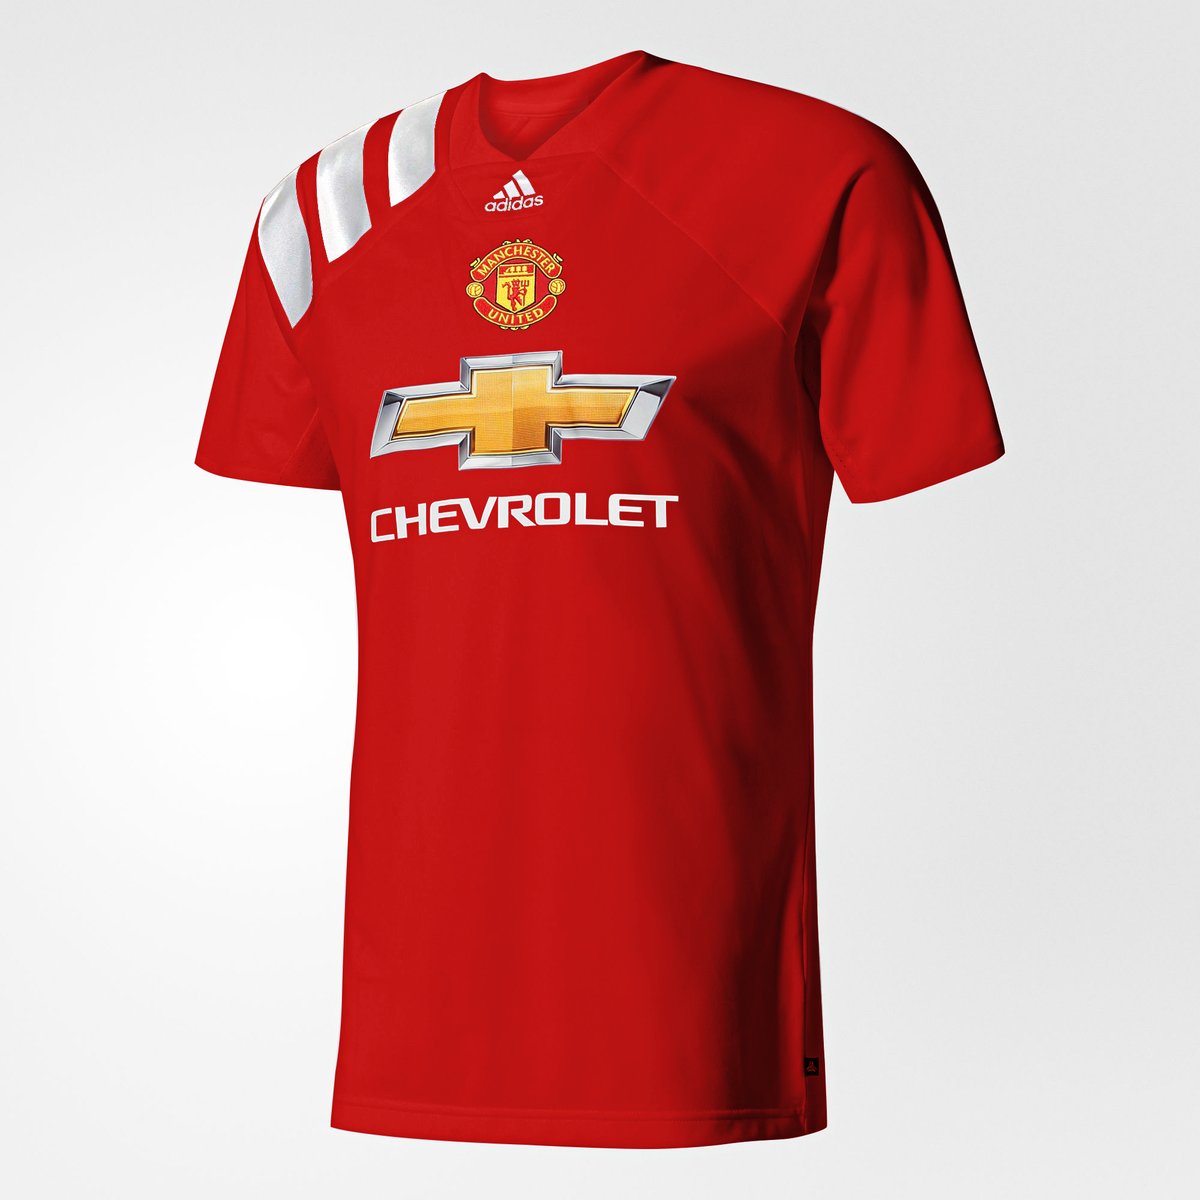 Adidas EQT Manchester United Home Shirt Concept by Franco Carabajal